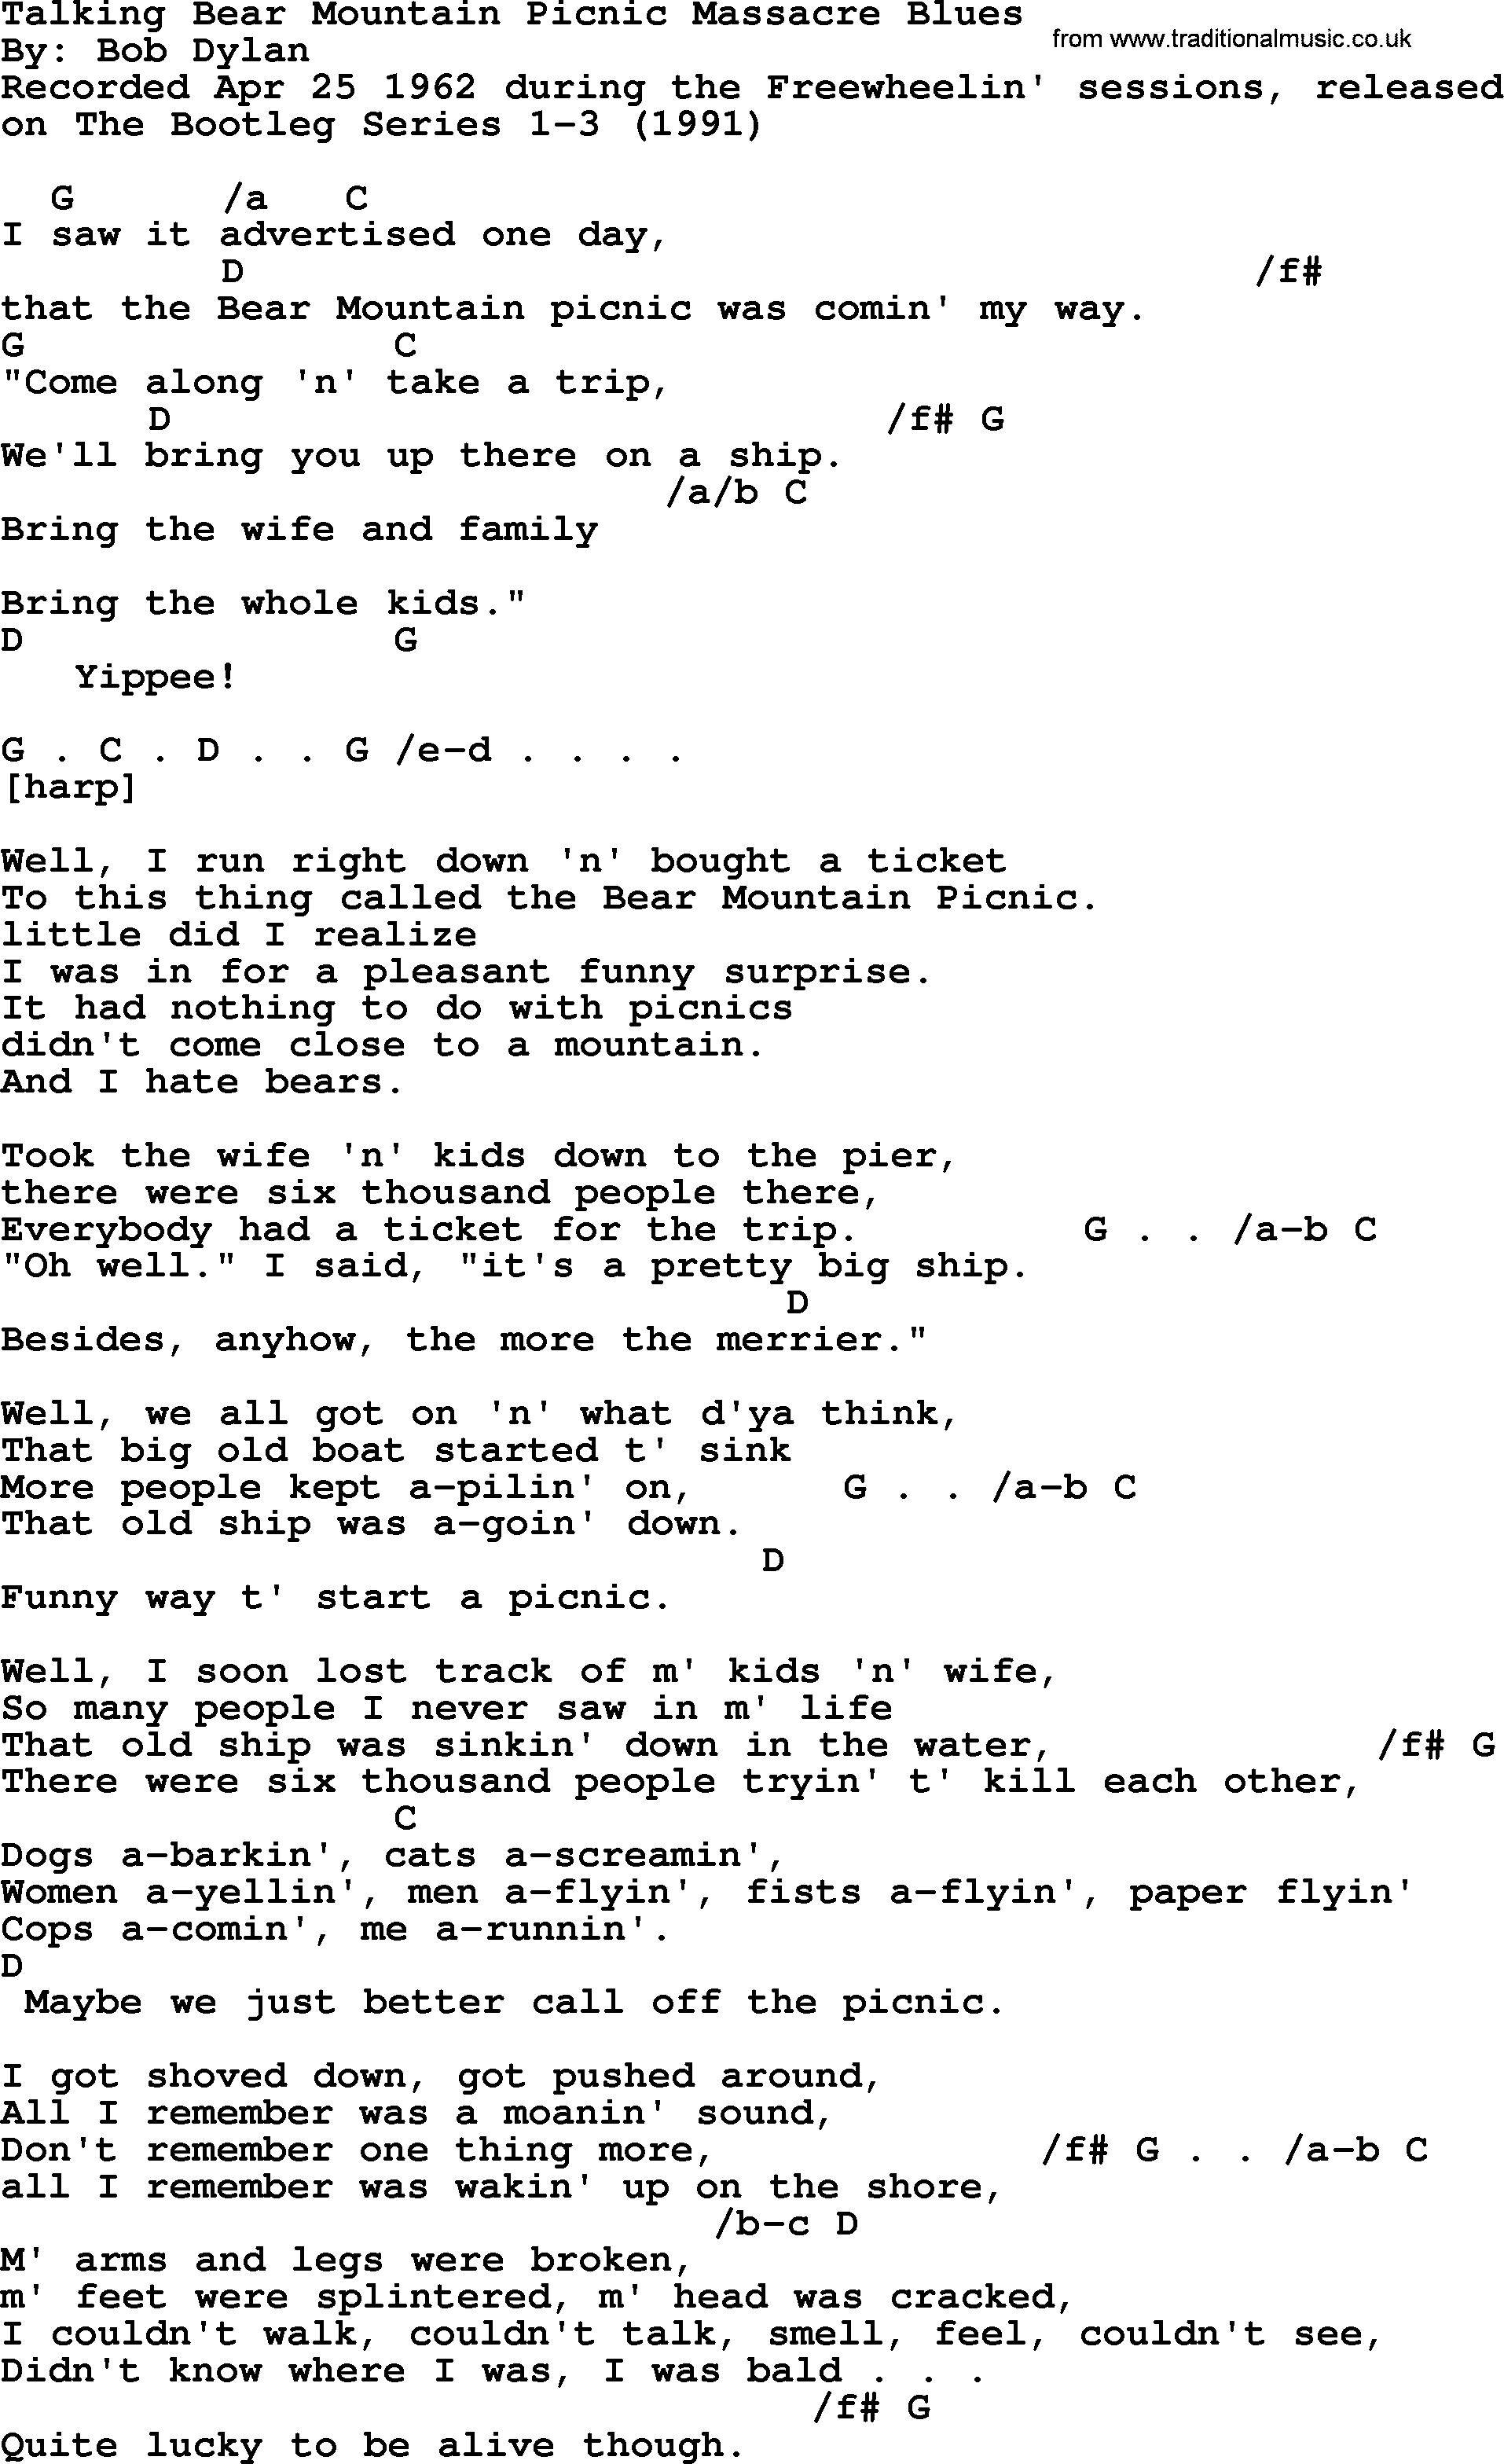 Bob Dylan song, lyrics with chords - Talking Bear Mountain Picnic Massacre Blues